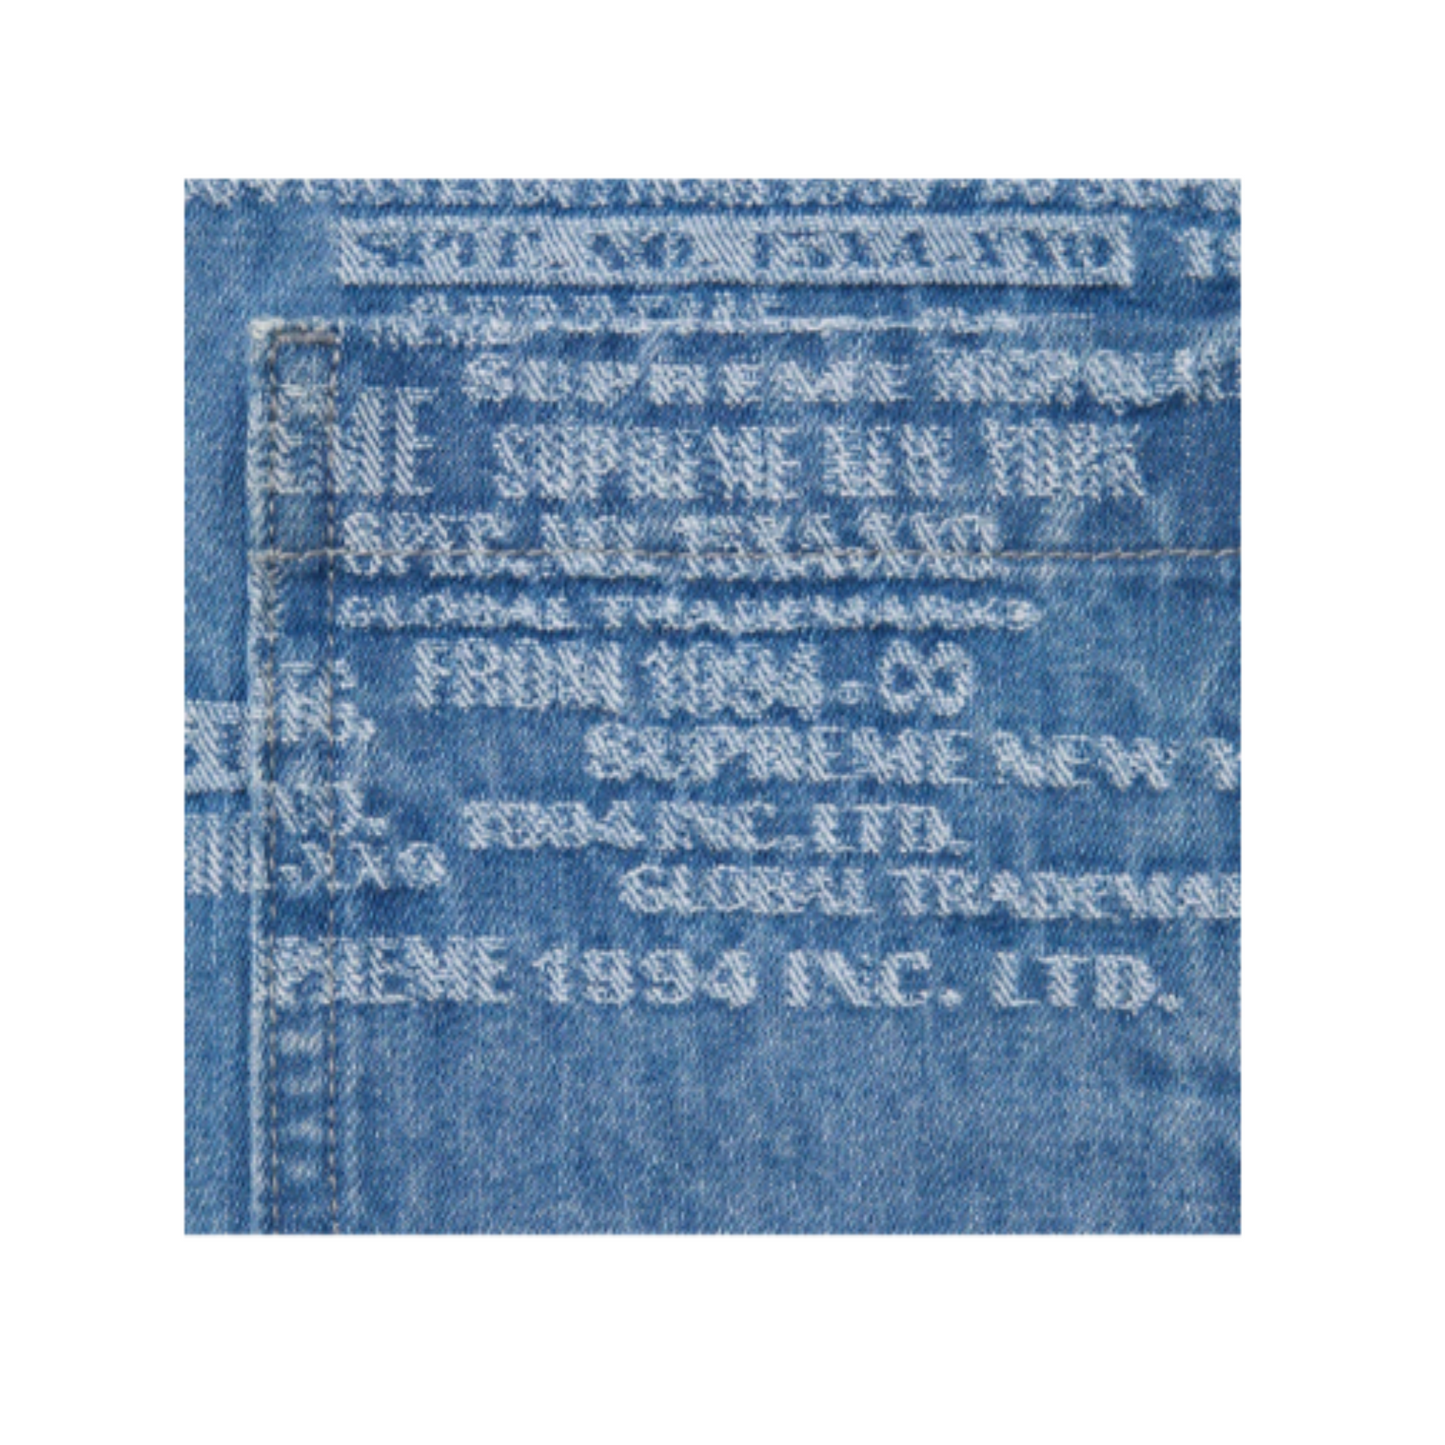 SUPREME Trademark Jacquard Denim Shirt - 'Washed Blue'